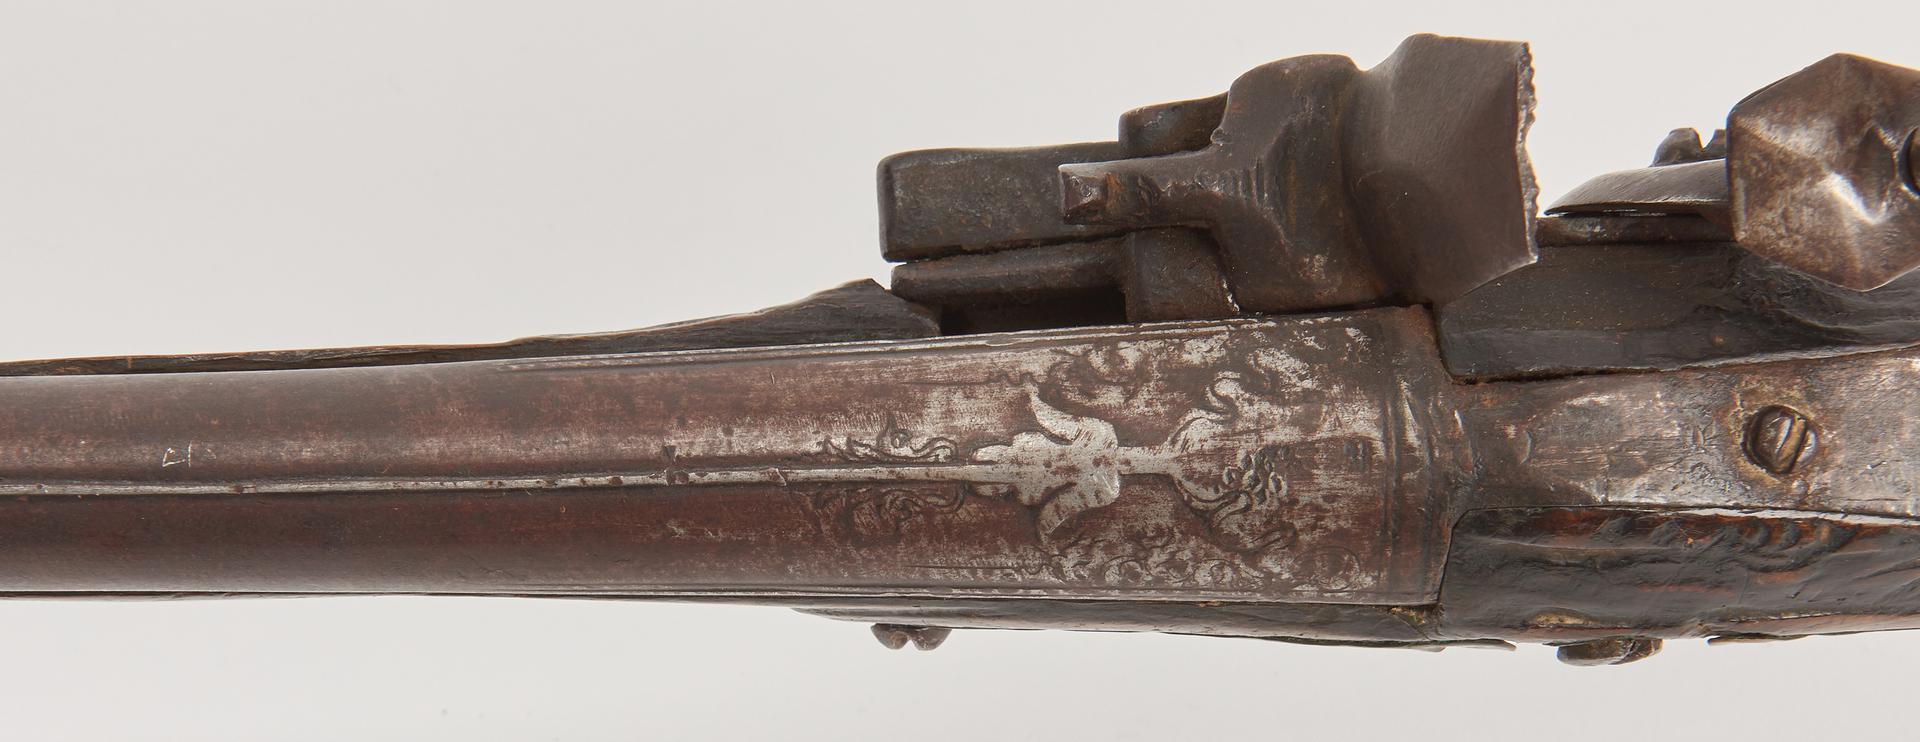 2 Flintlock Pistols, Gen. Jackson, Ambrister and Arbuthnot history - Image 43 of 59